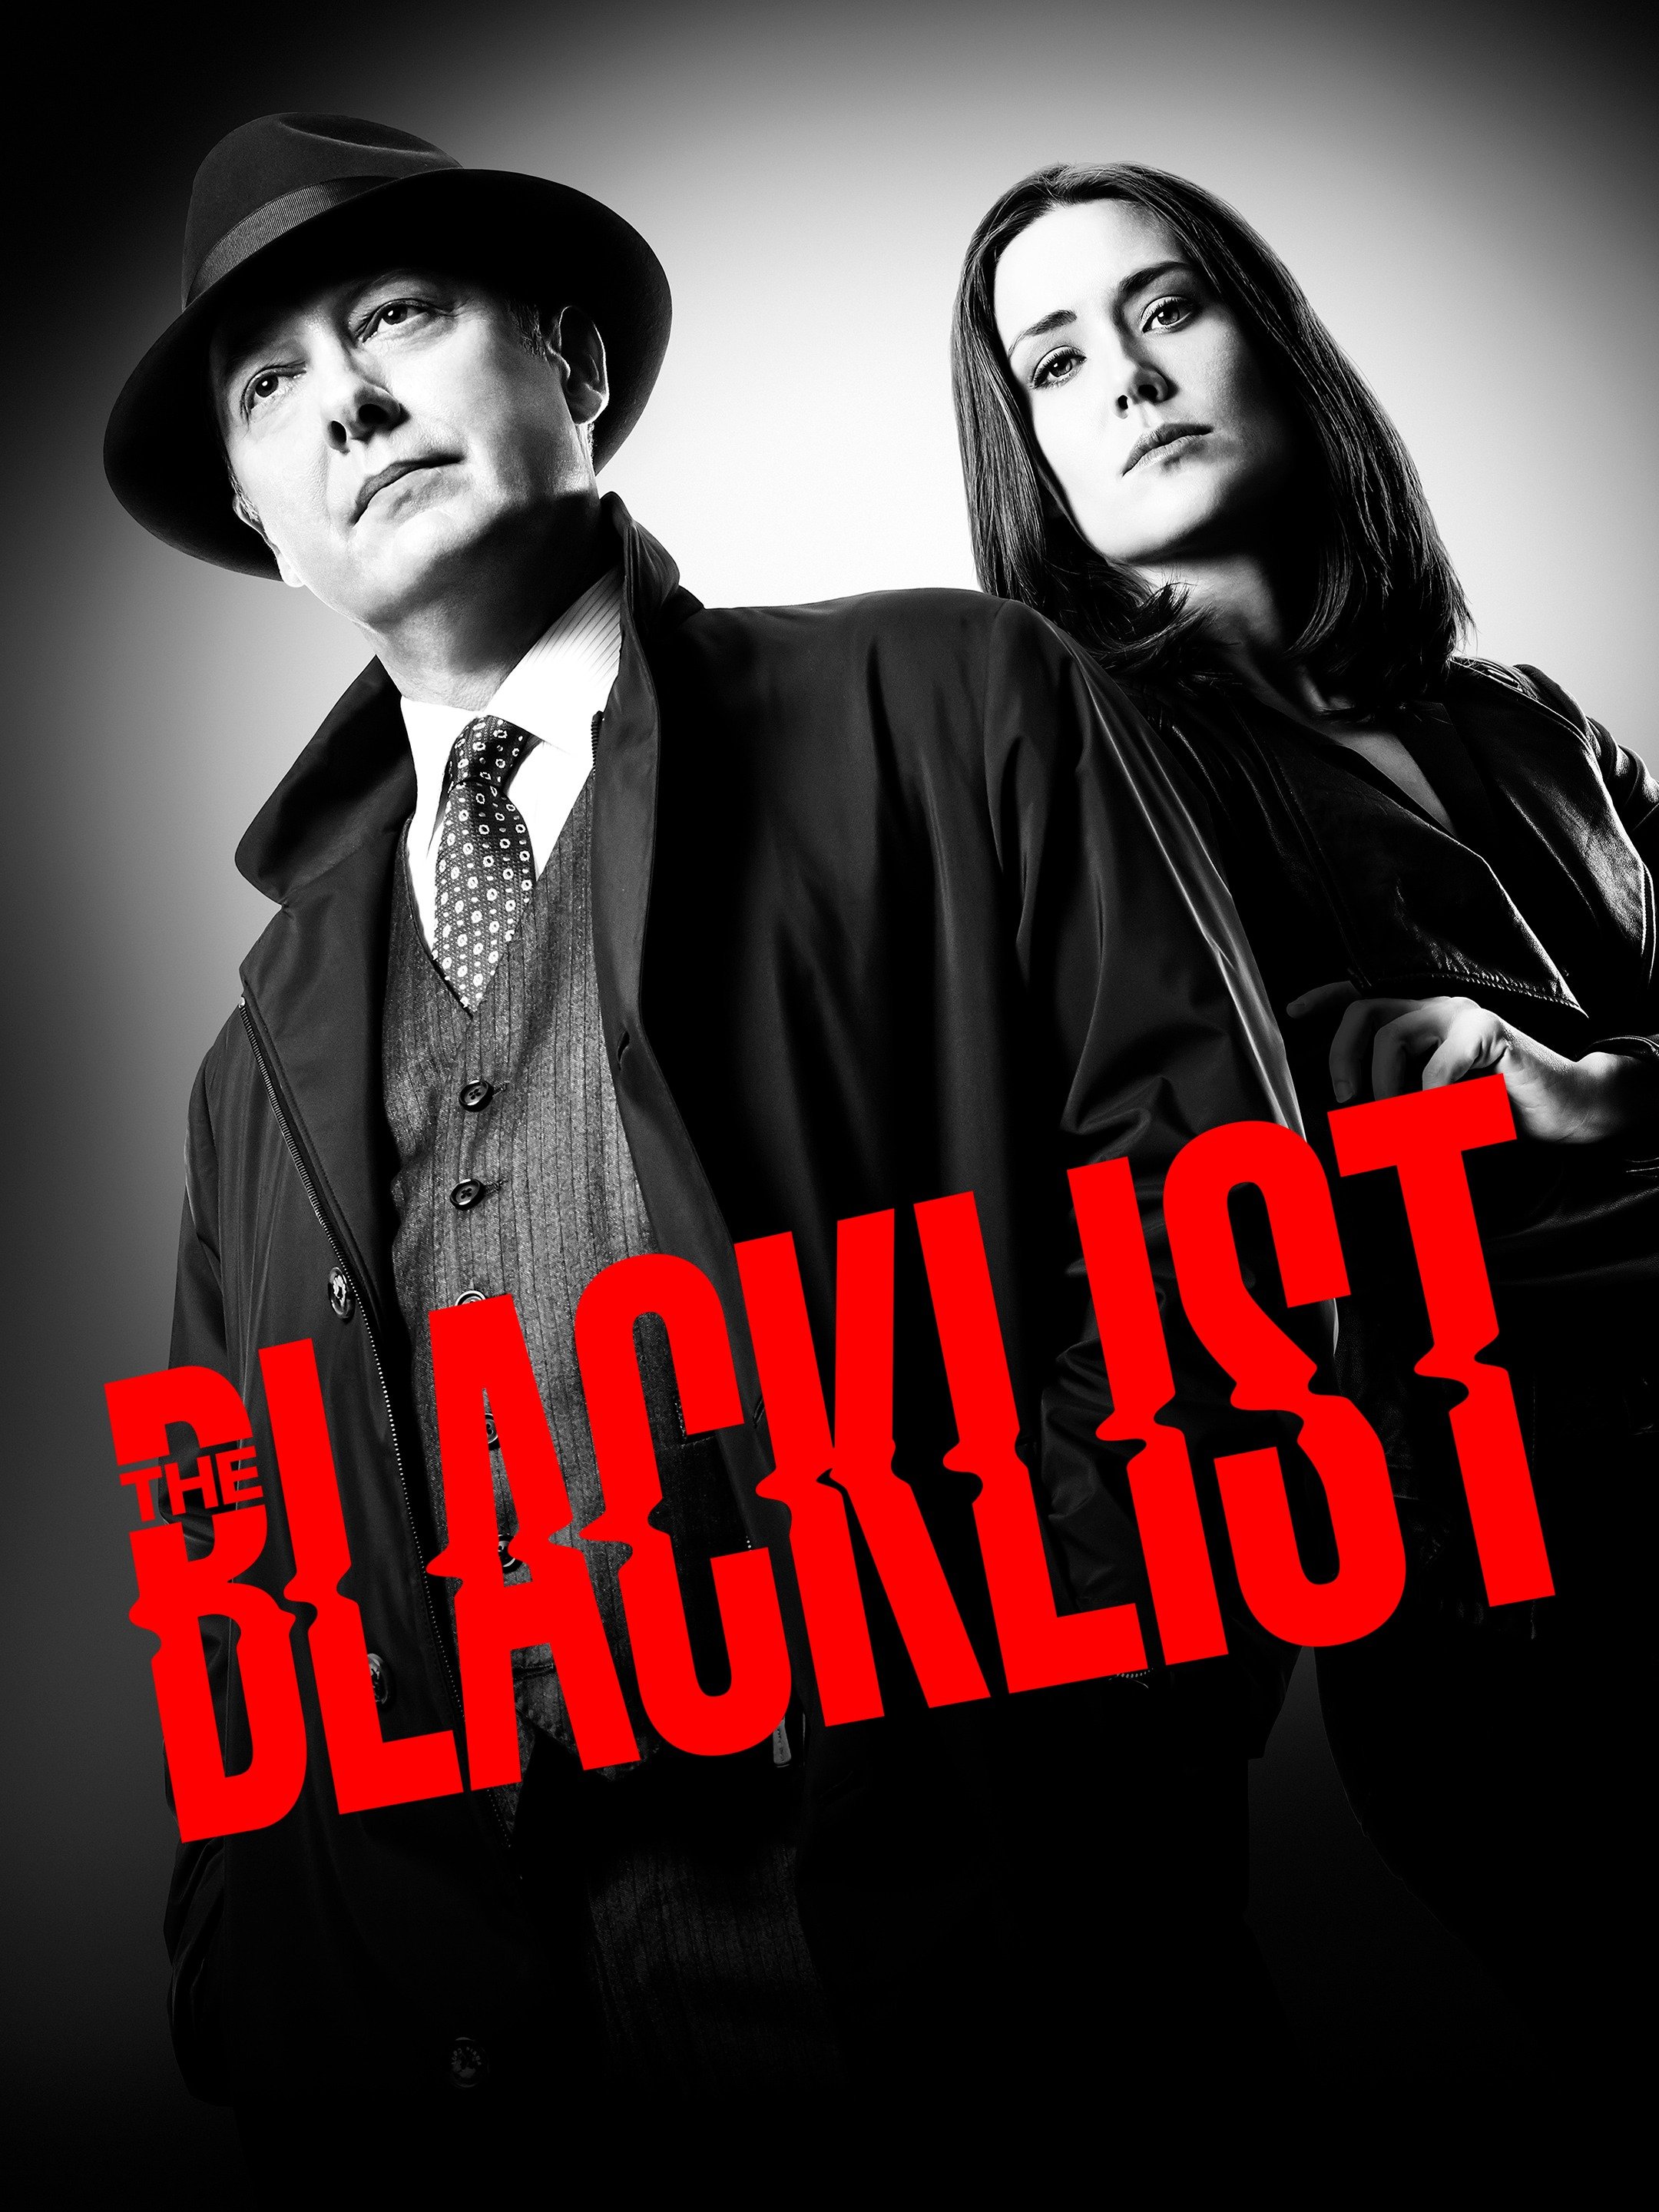 how many episodes in blacklist season 3